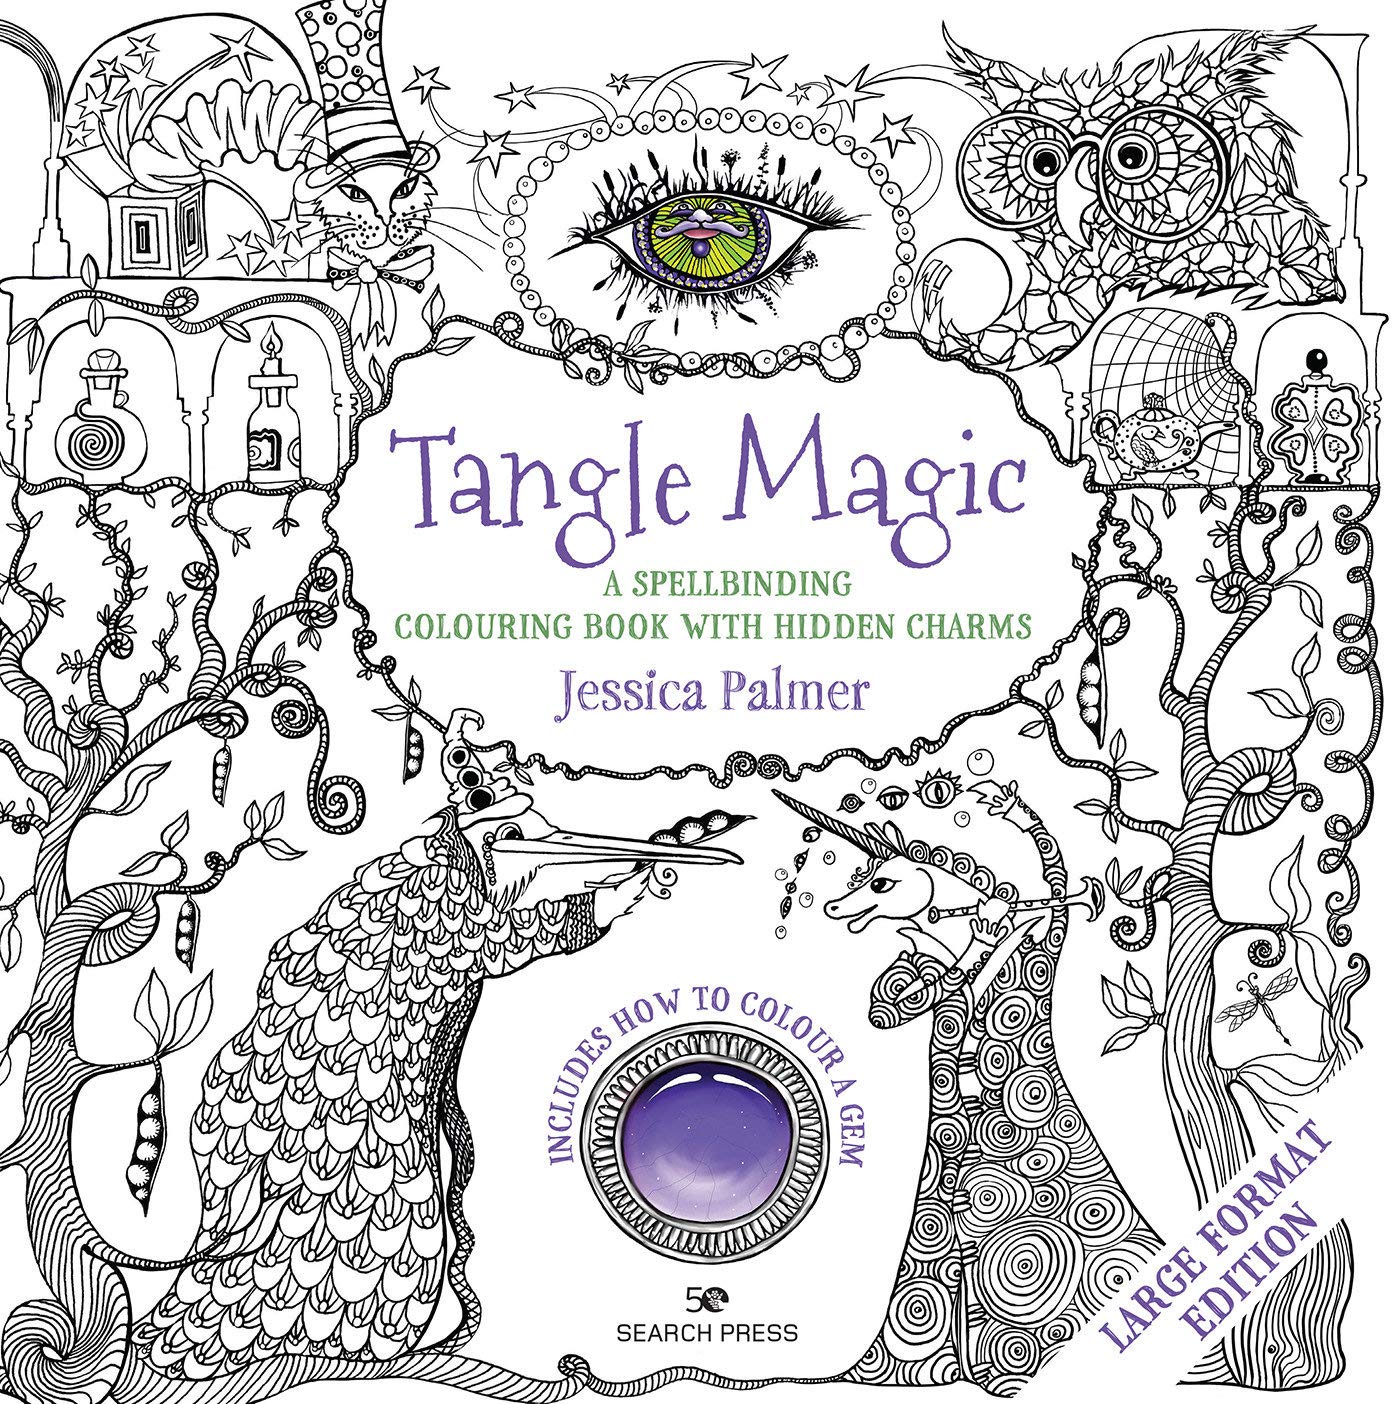 Search Press Books - Tangle Magic Colouring Book - Large Format